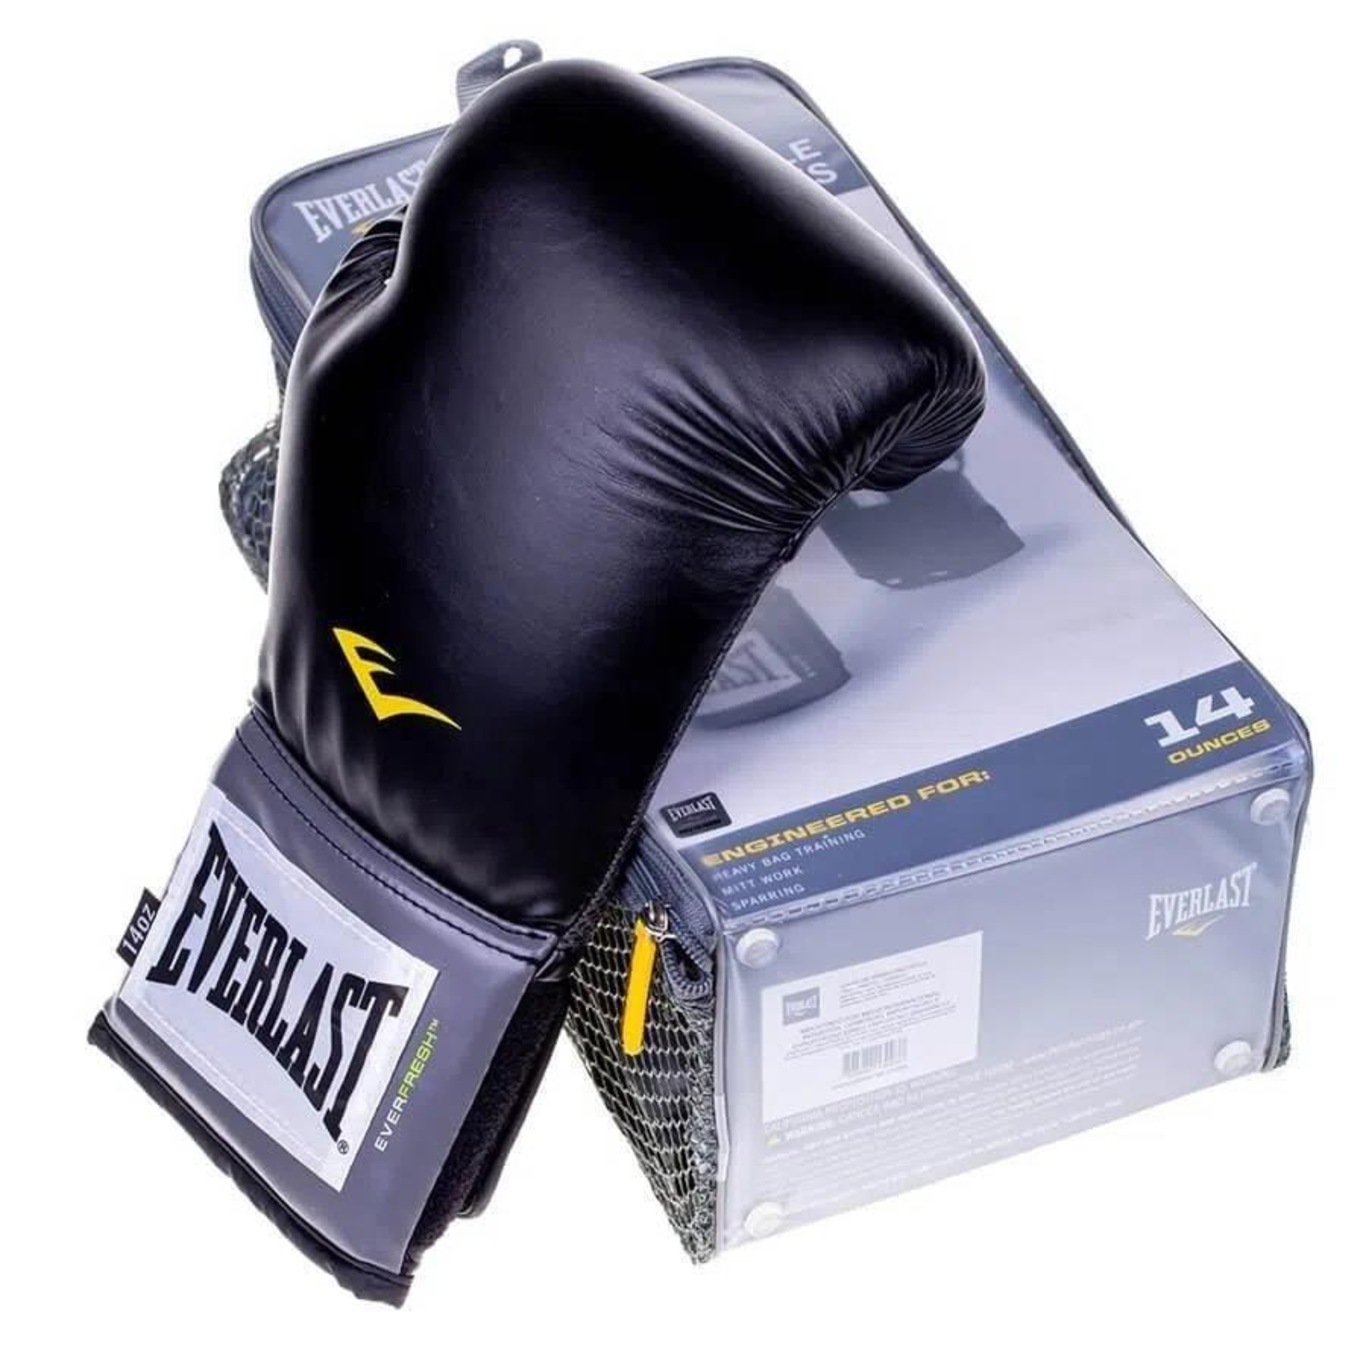 Everlast Pro Style2 Training Gloves